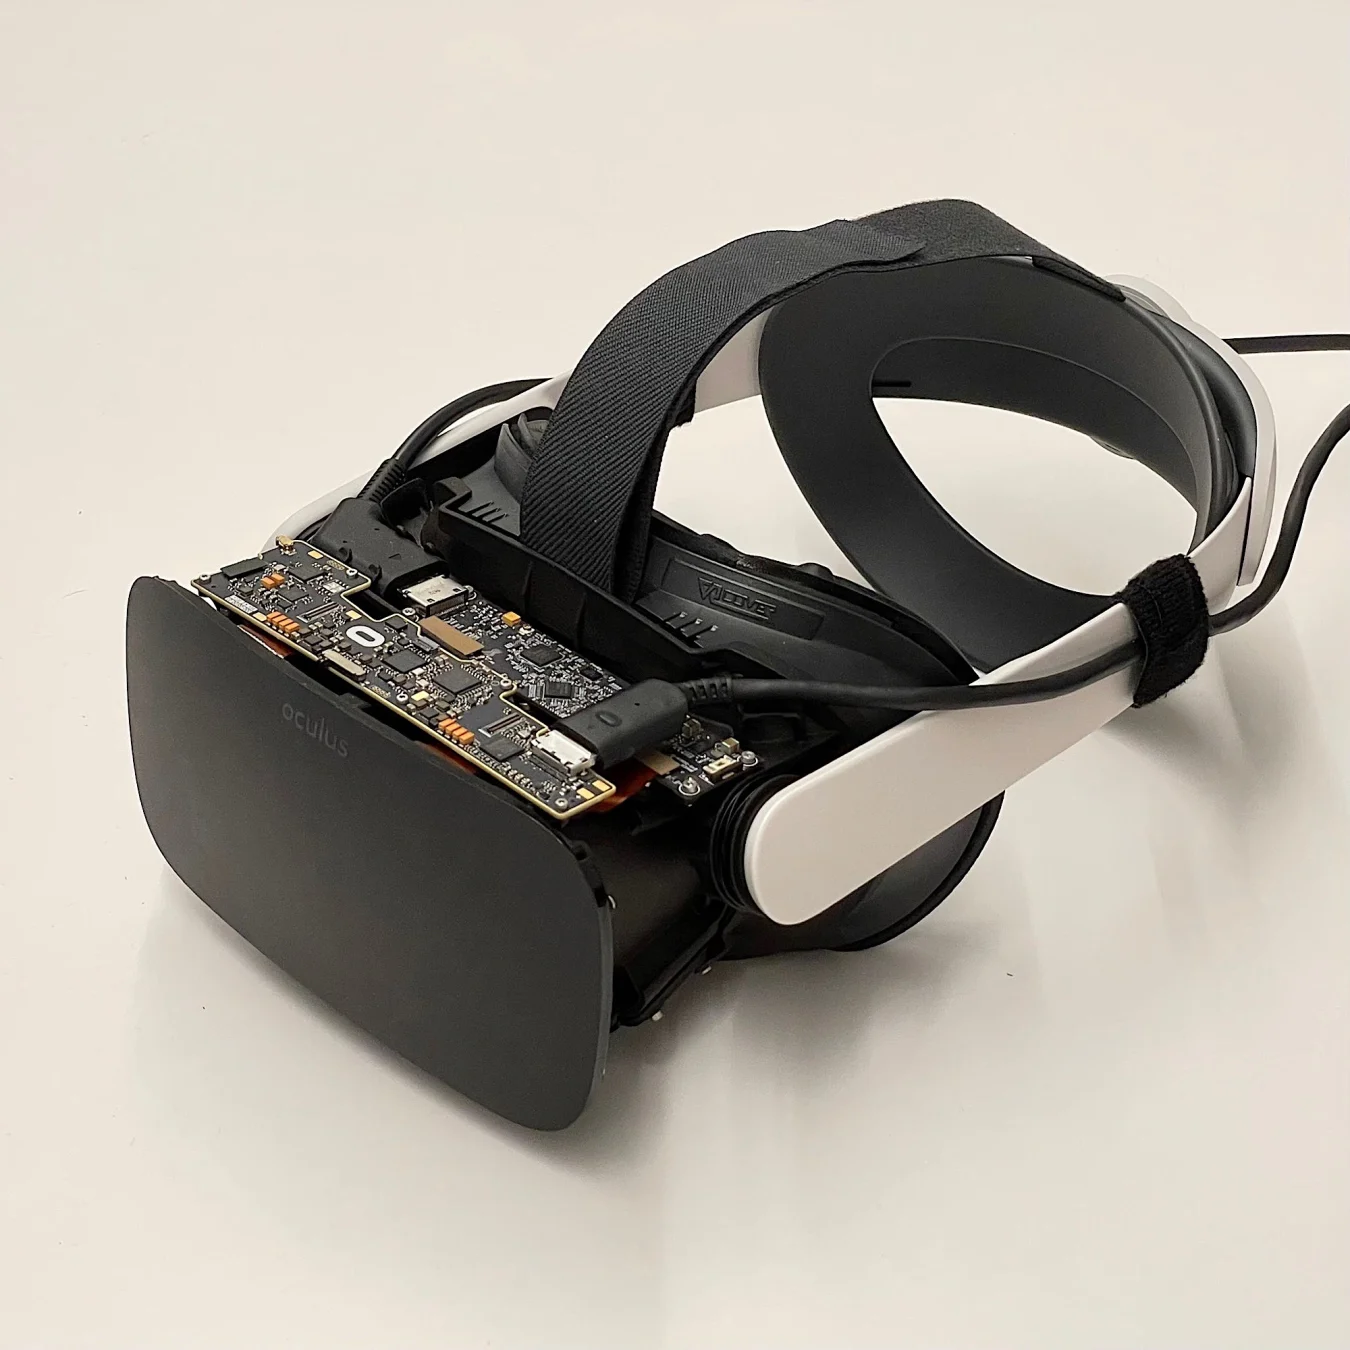 Meta Reality Labs VR headset prototypes